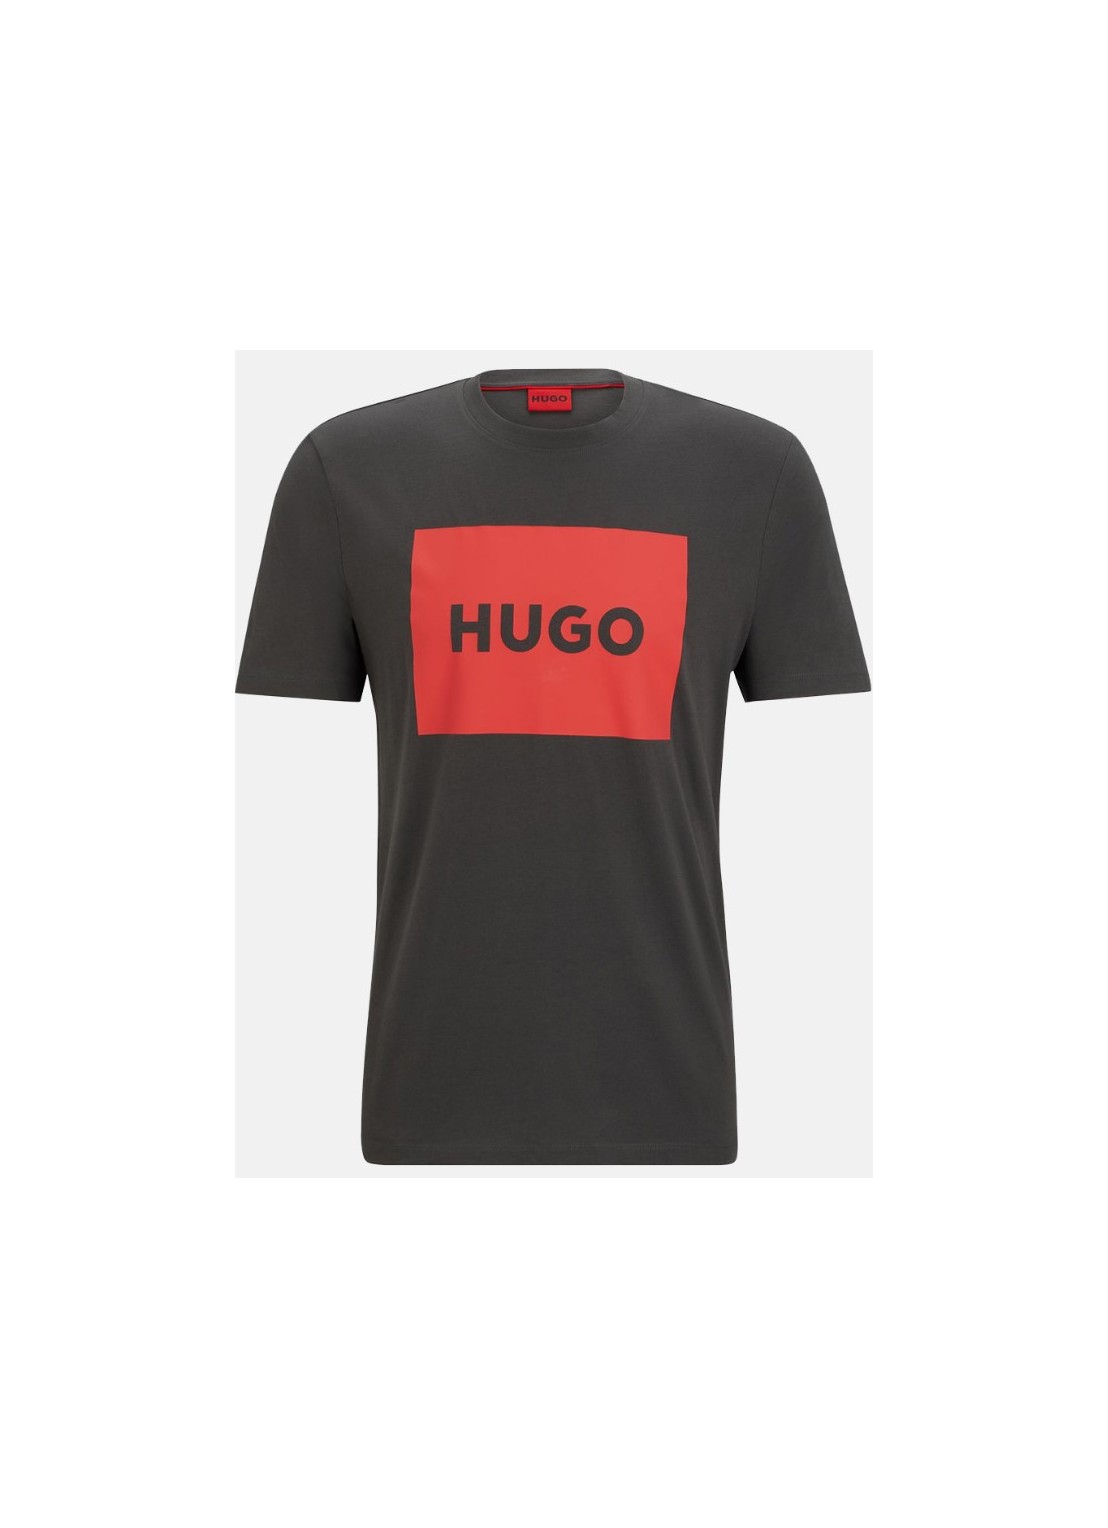 Camiseta hugo t-shirt man dulive222 50467952 023 talla gris
 